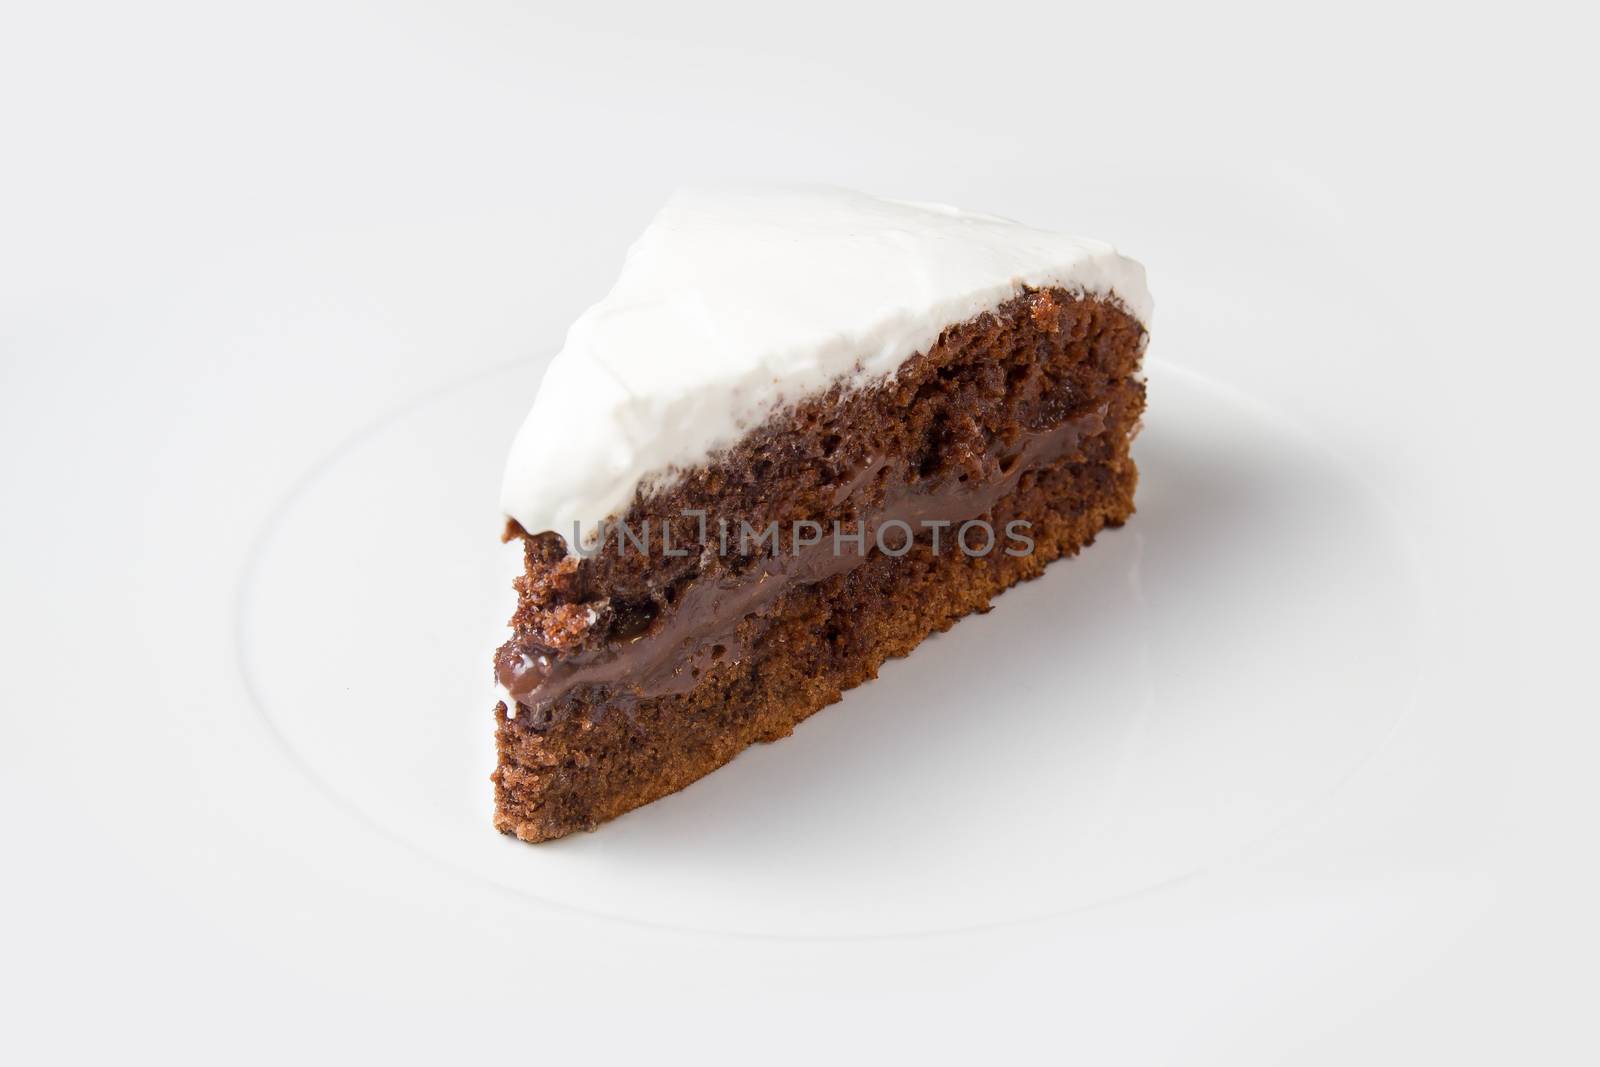 Chocolate cake  by dynamicfoto